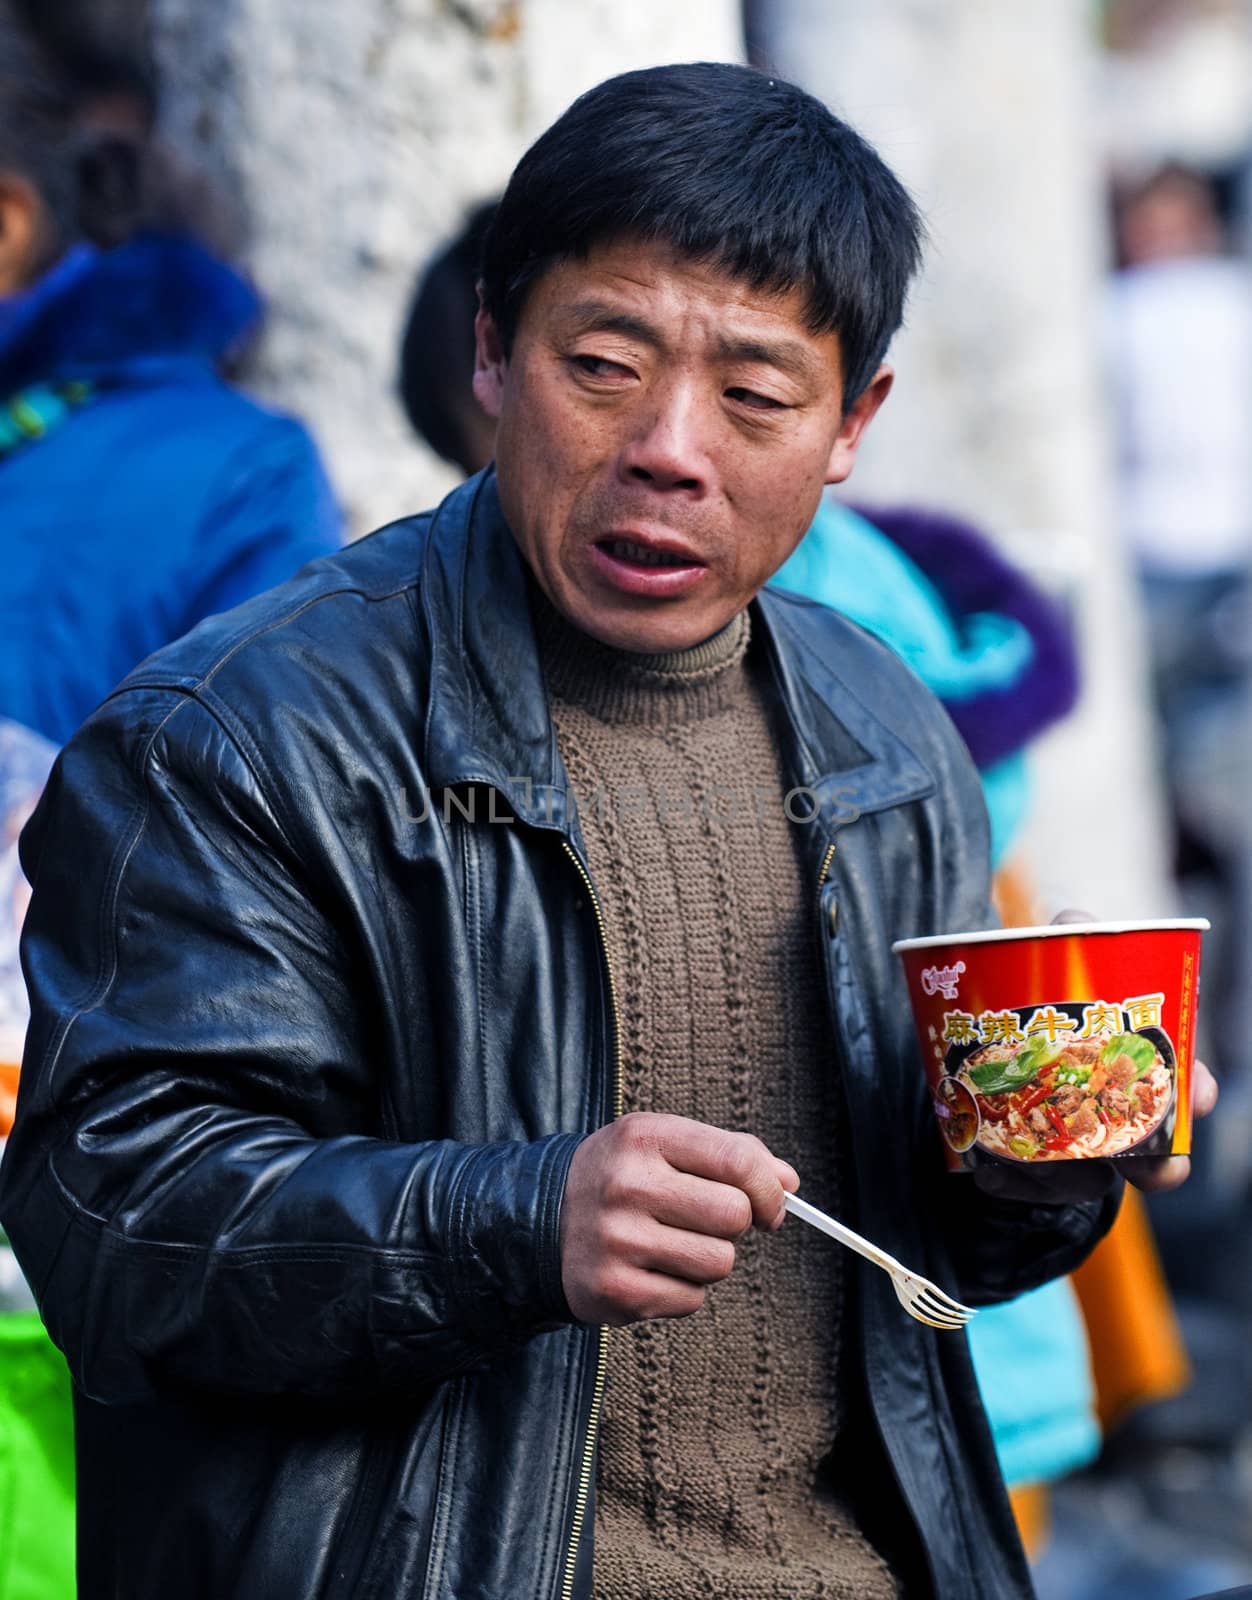 Chinese man by kobby_dagan